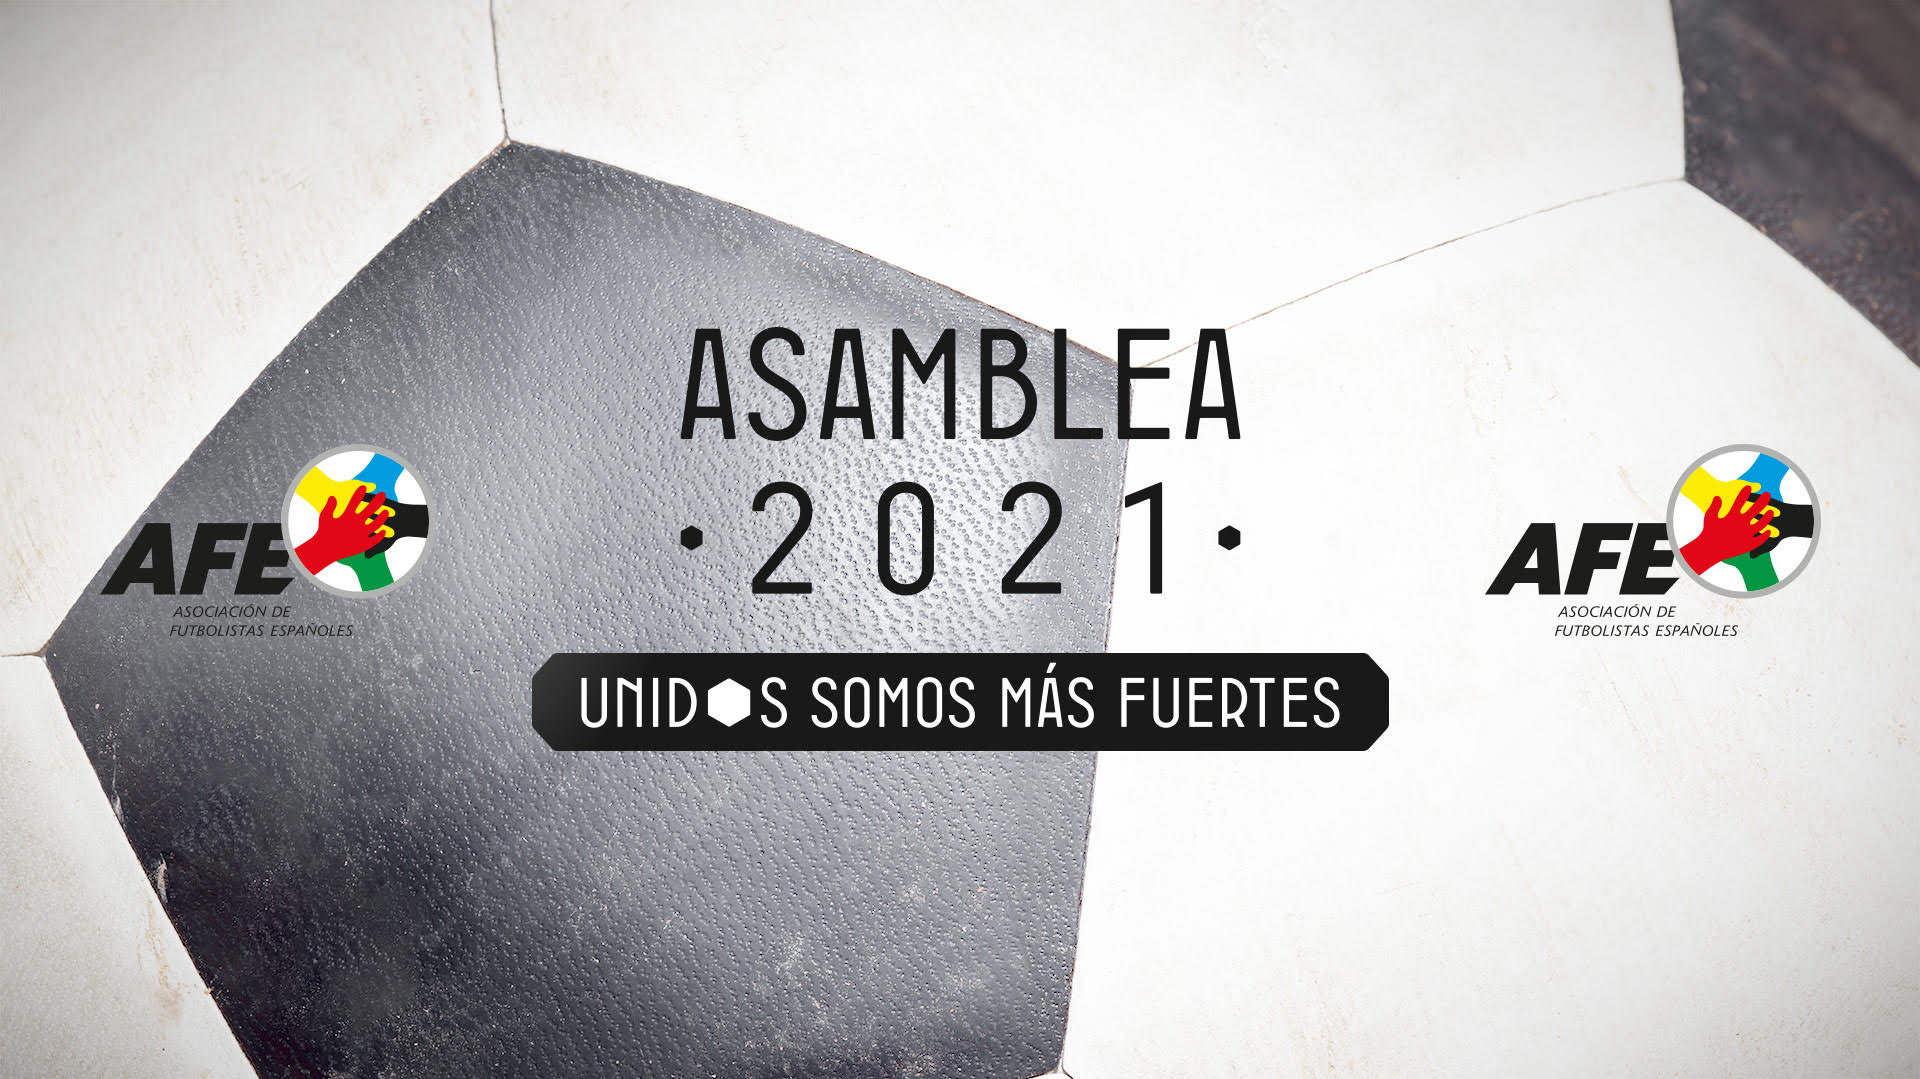 ASAMBLEA AFE 2021